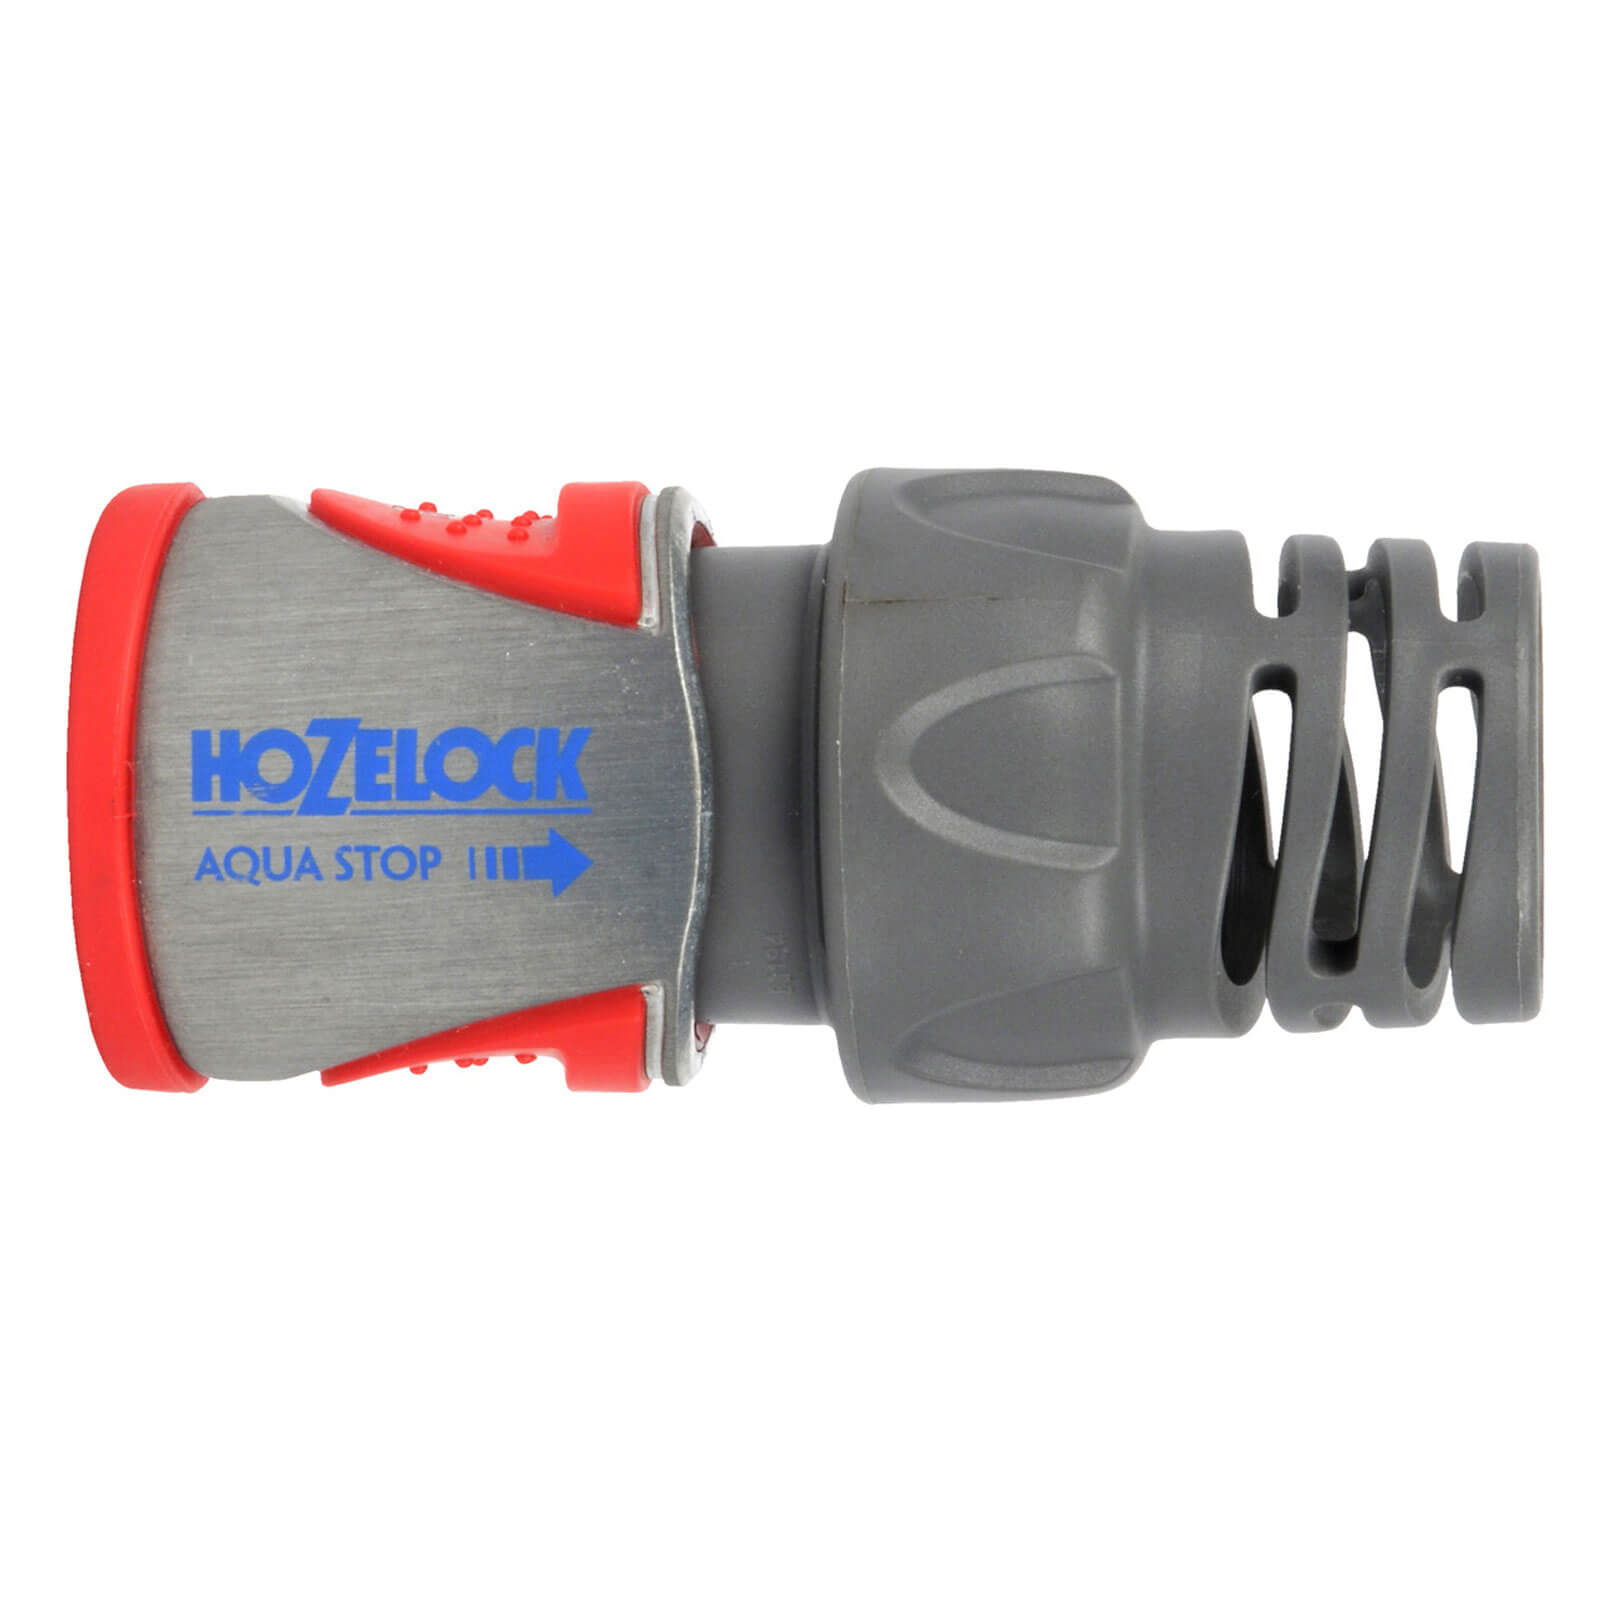 Hozelock Pro Metal Aquastop Hose End Connector for 19mm (3/4") Hose Pipes